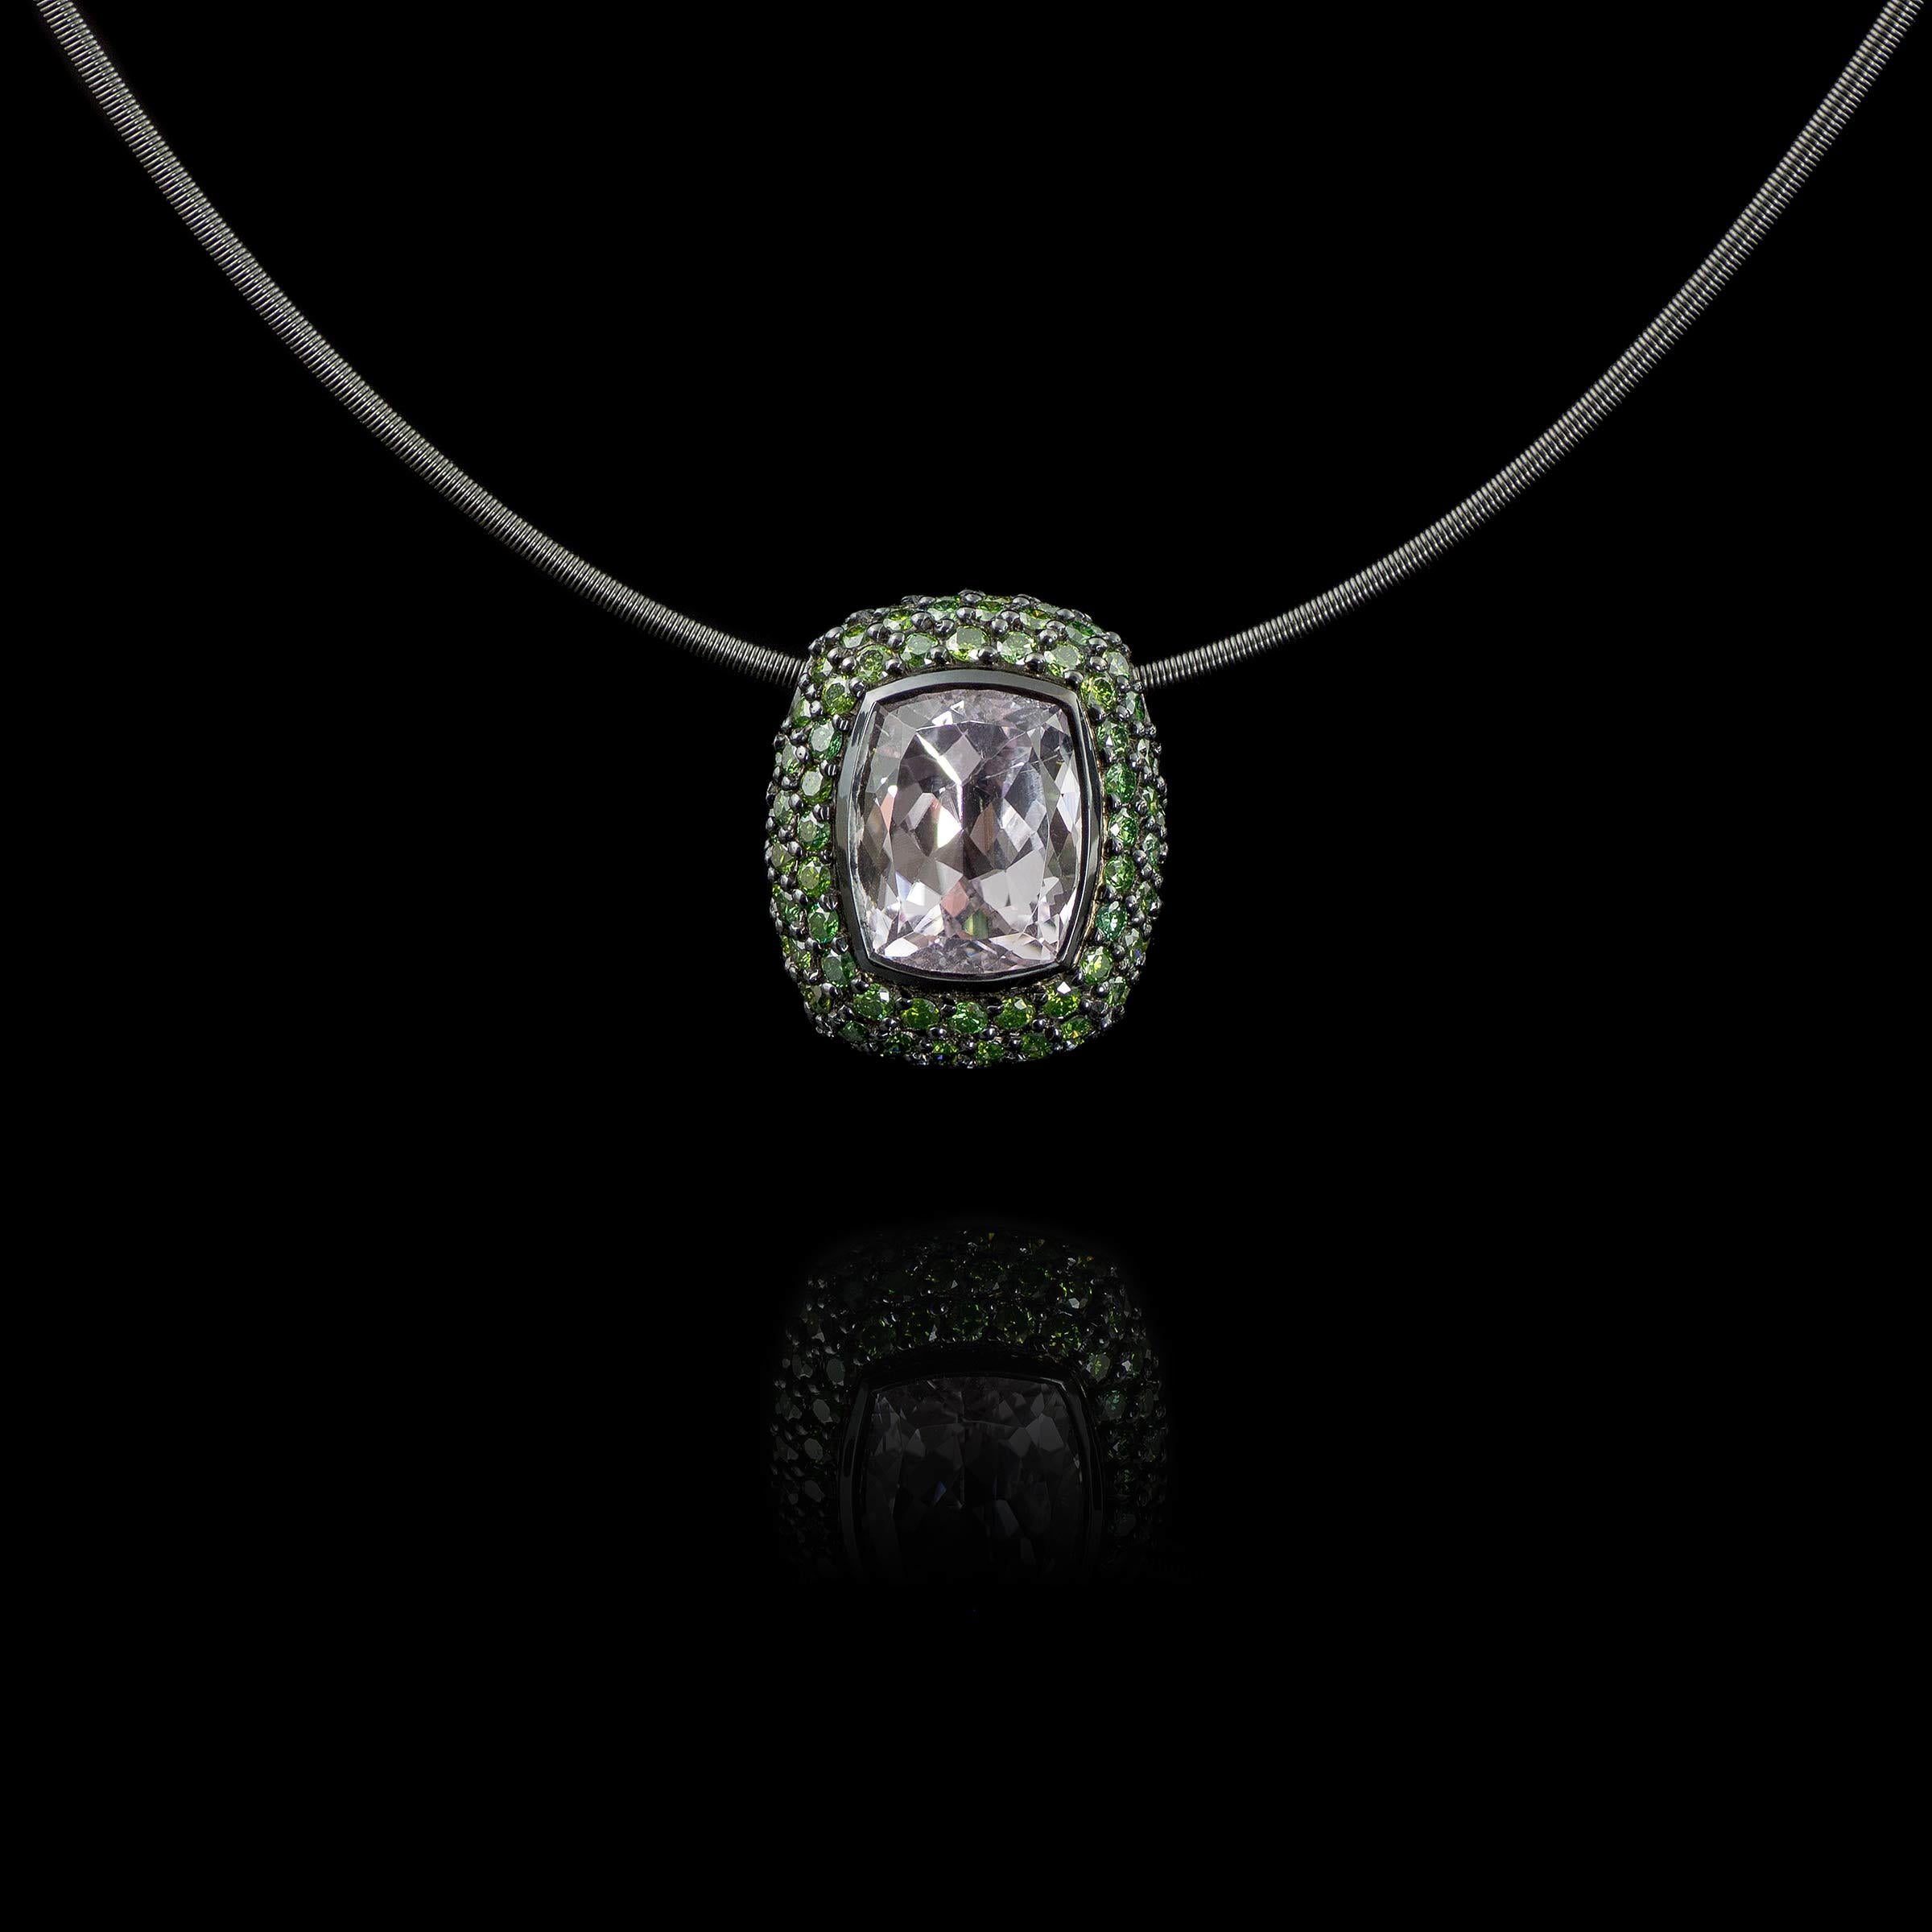 Pastel pink kunzite pendant framed by green diamonds. 